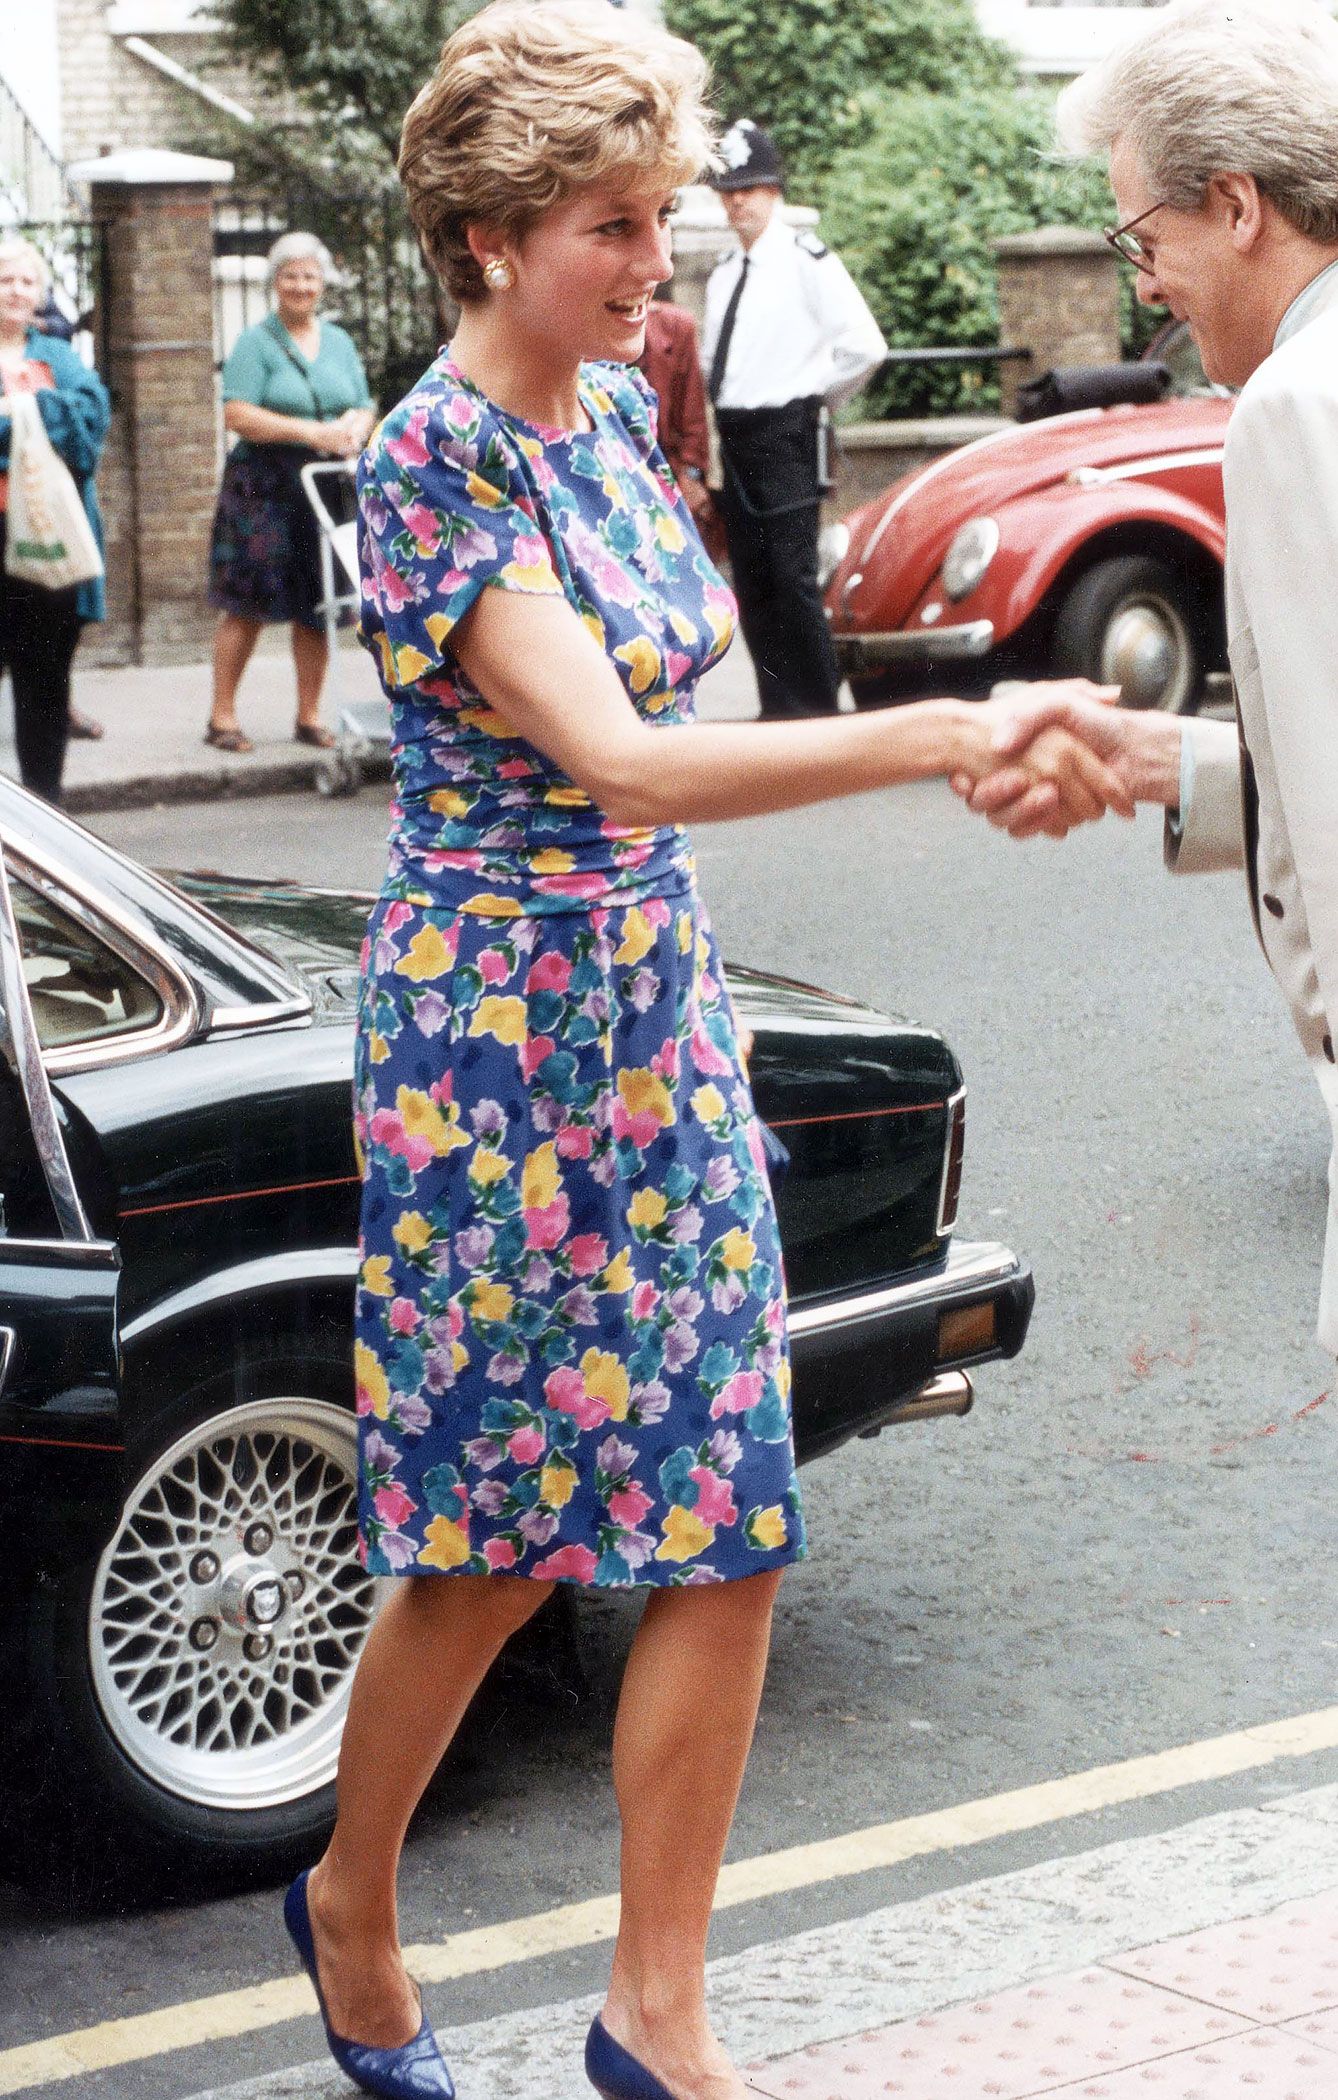 Deretan Busana Cerah Putri Diana Paling Ikonik yang Jadi Tren Fashion!